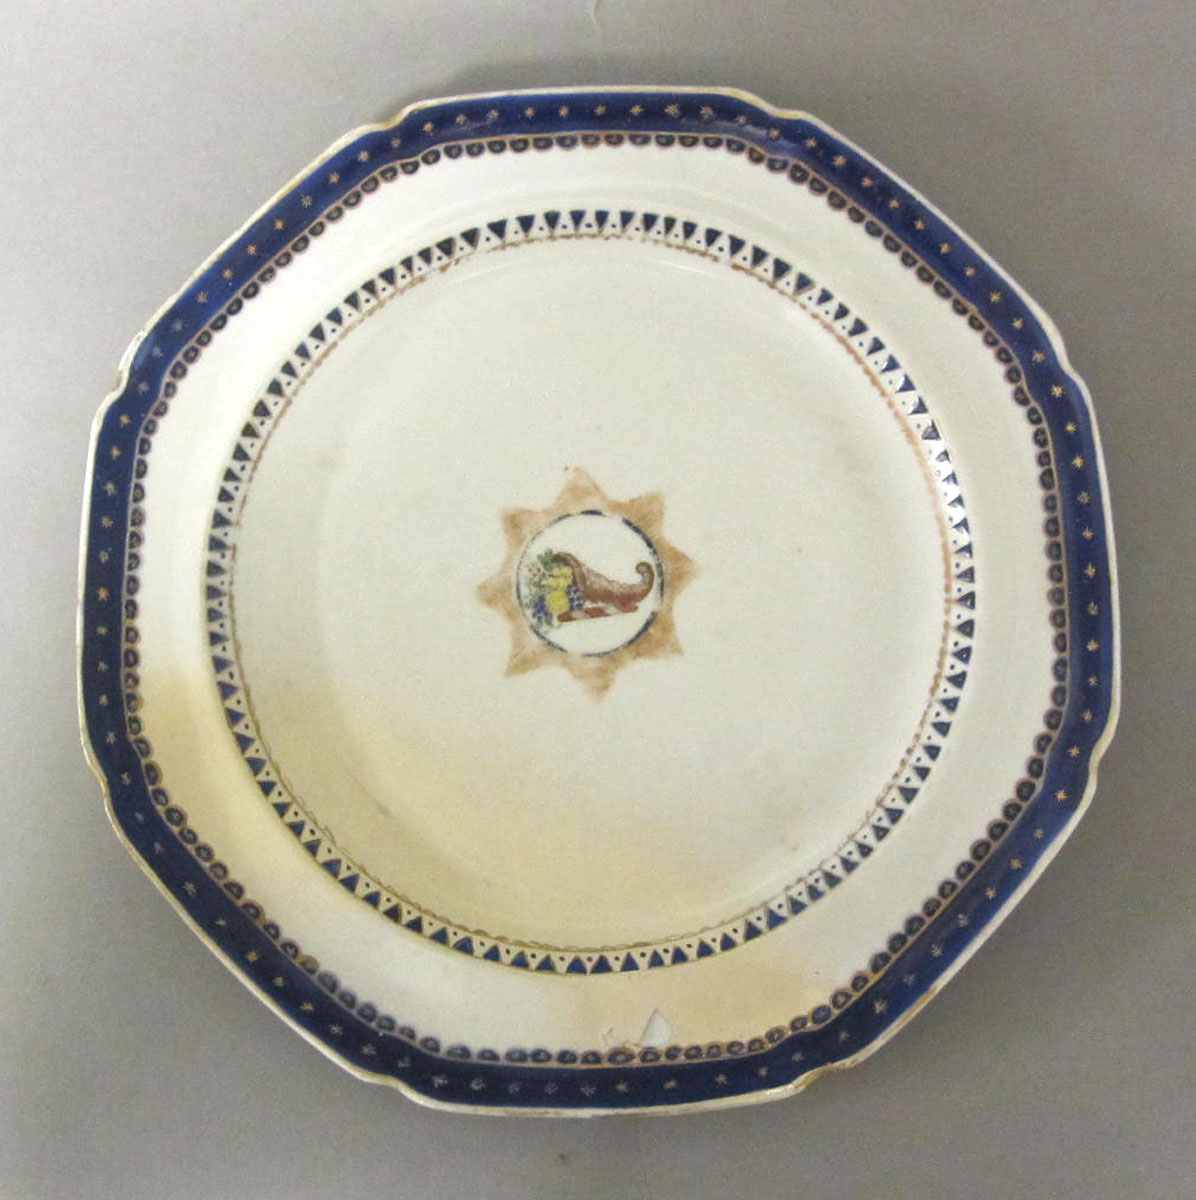 1965.0718.010 Porcelain plate